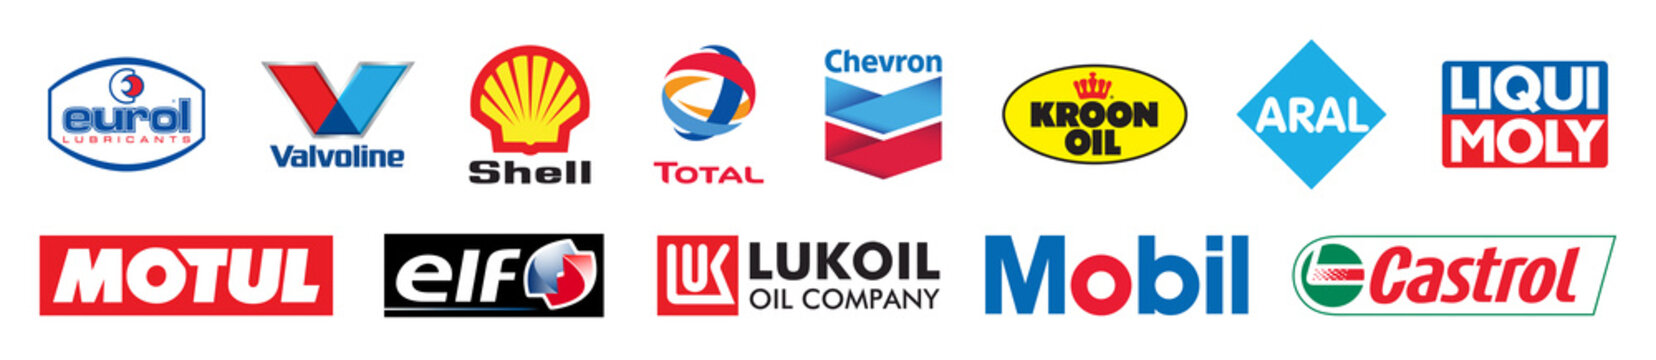 Kiev, Ukraine - July 04, 2021: Set top world most largest oil company brands logo: Eurol, Valvoline, Shell, Total, Chevron, Lukoil, Kroon oil, Aral, Motul, Elf, Mobil, Castrol. Editorial vector